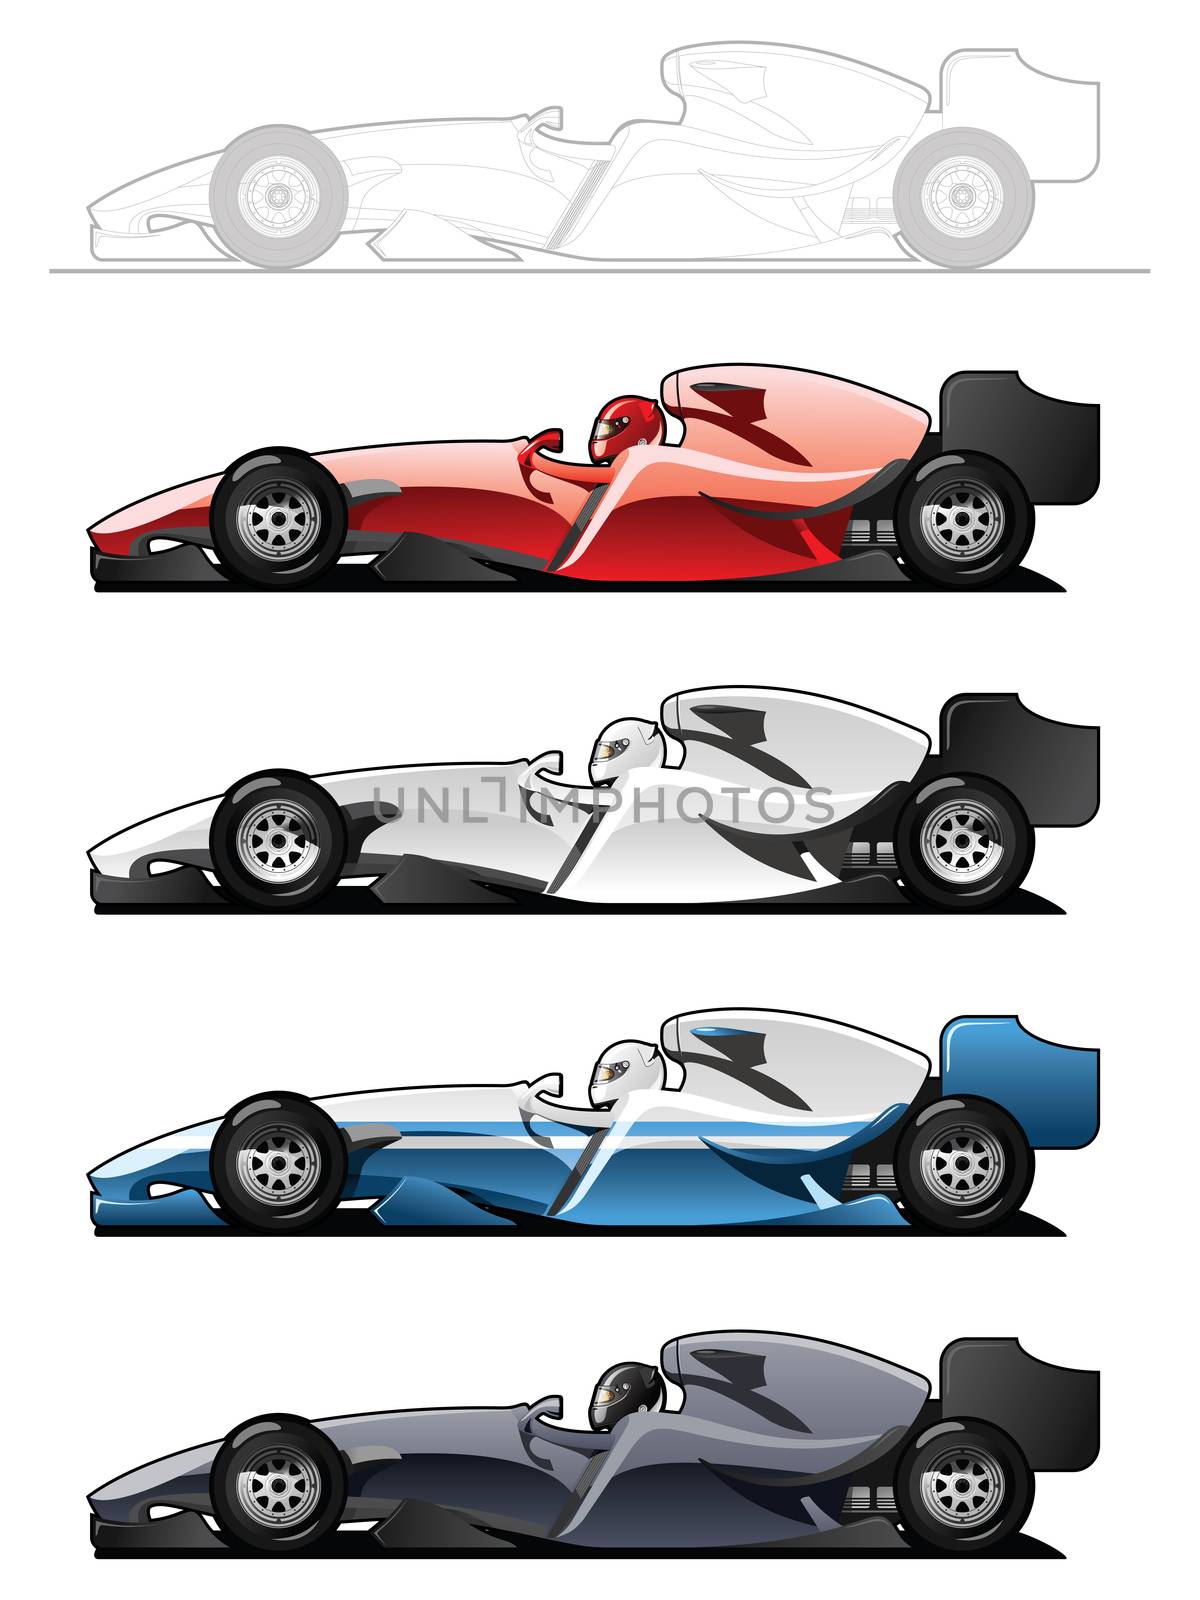 Racecars by Suricoma